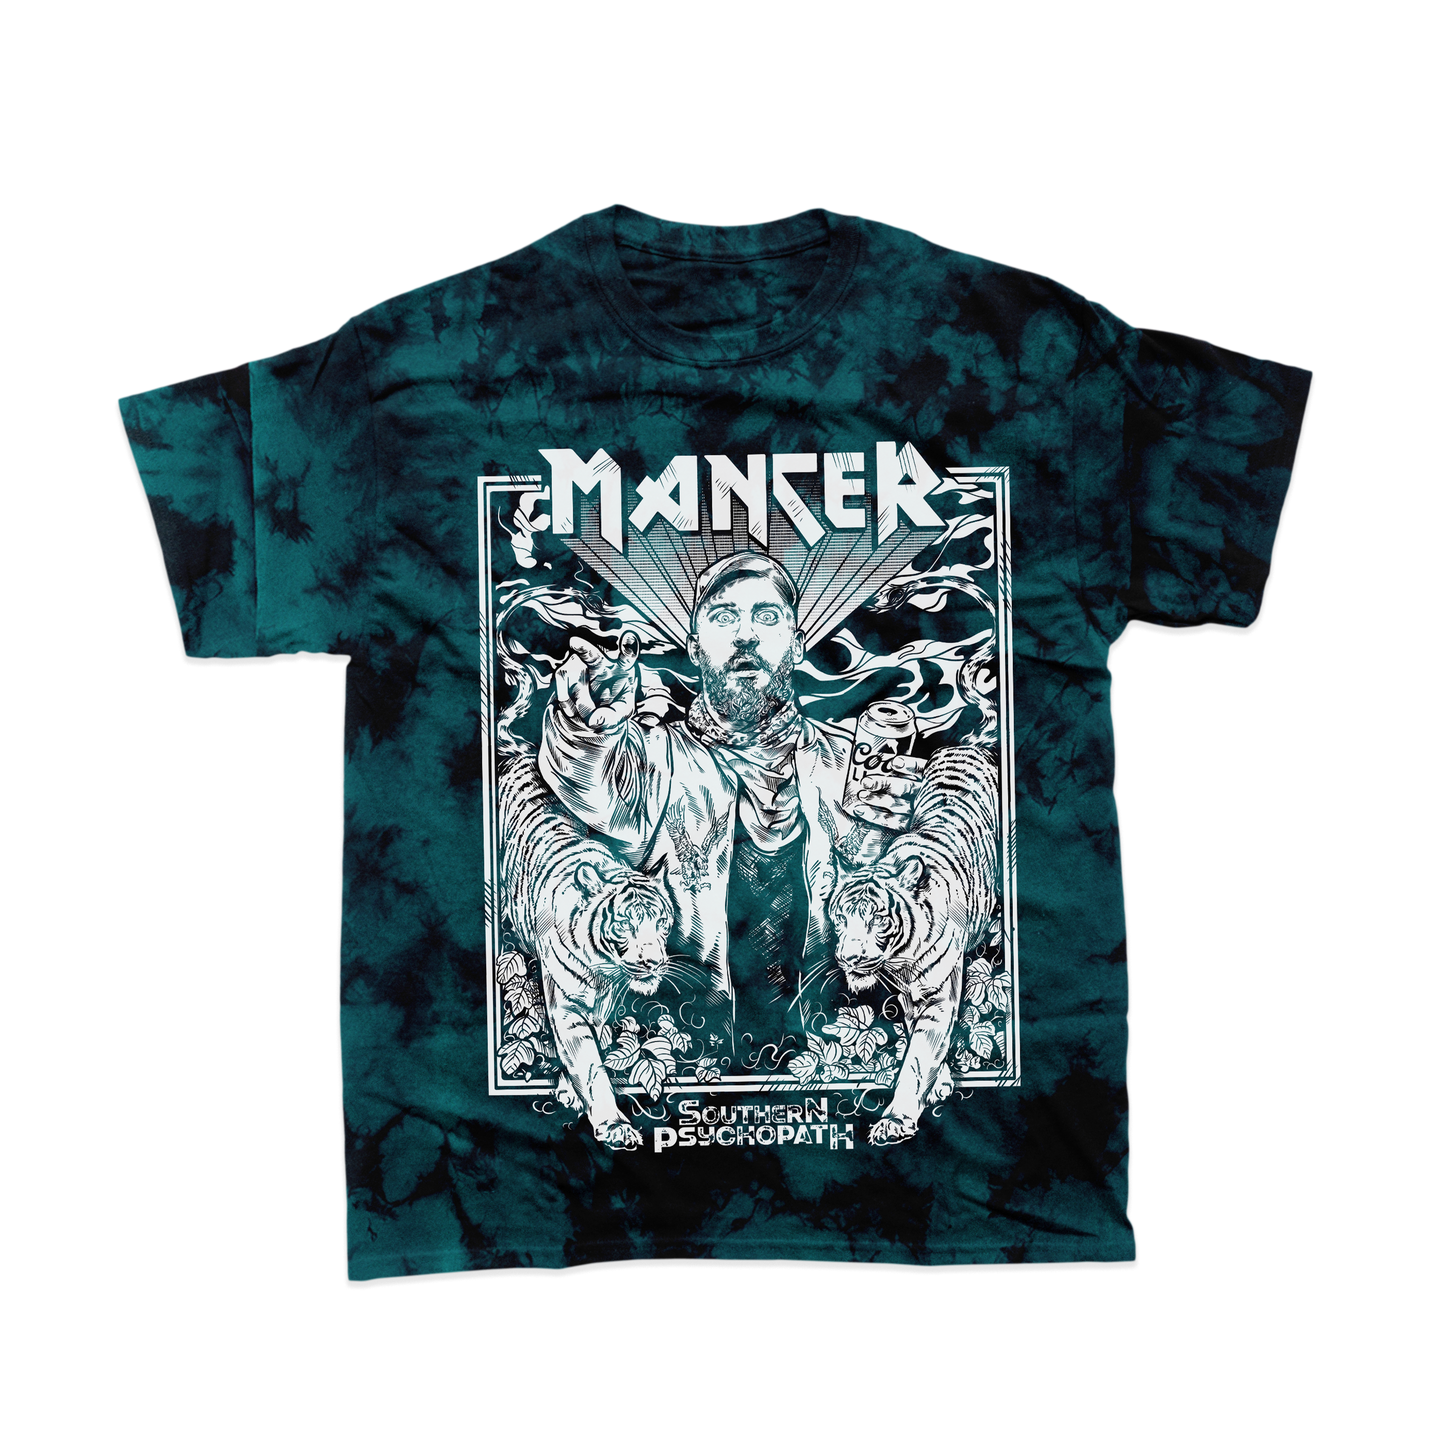 Mance Warner "Southern Psycho" Teal/ Black Shirt